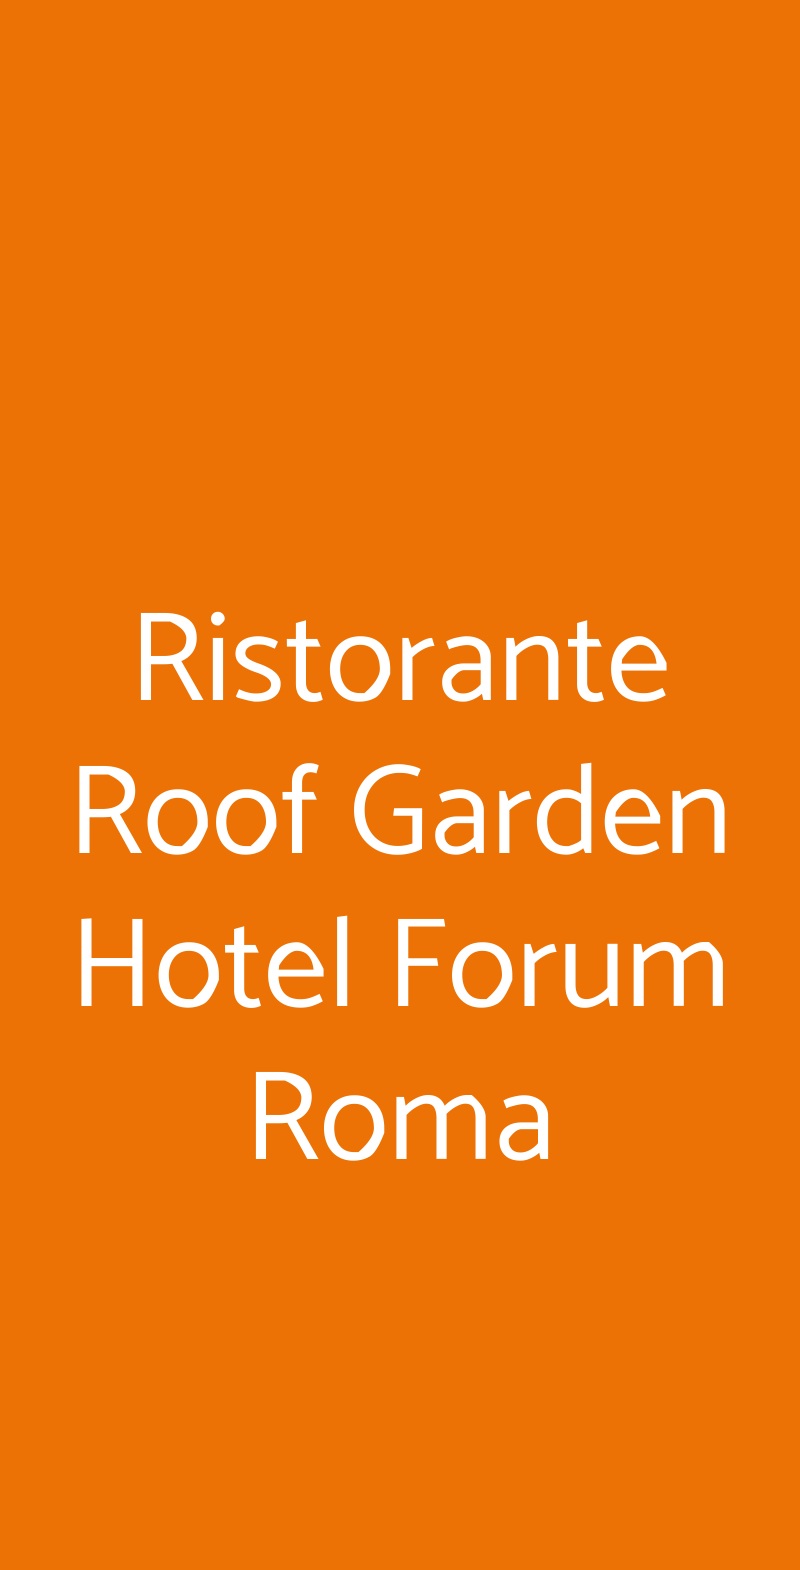 Ristorante Roof Garden Hotel Forum Roma Roma menù 1 pagina